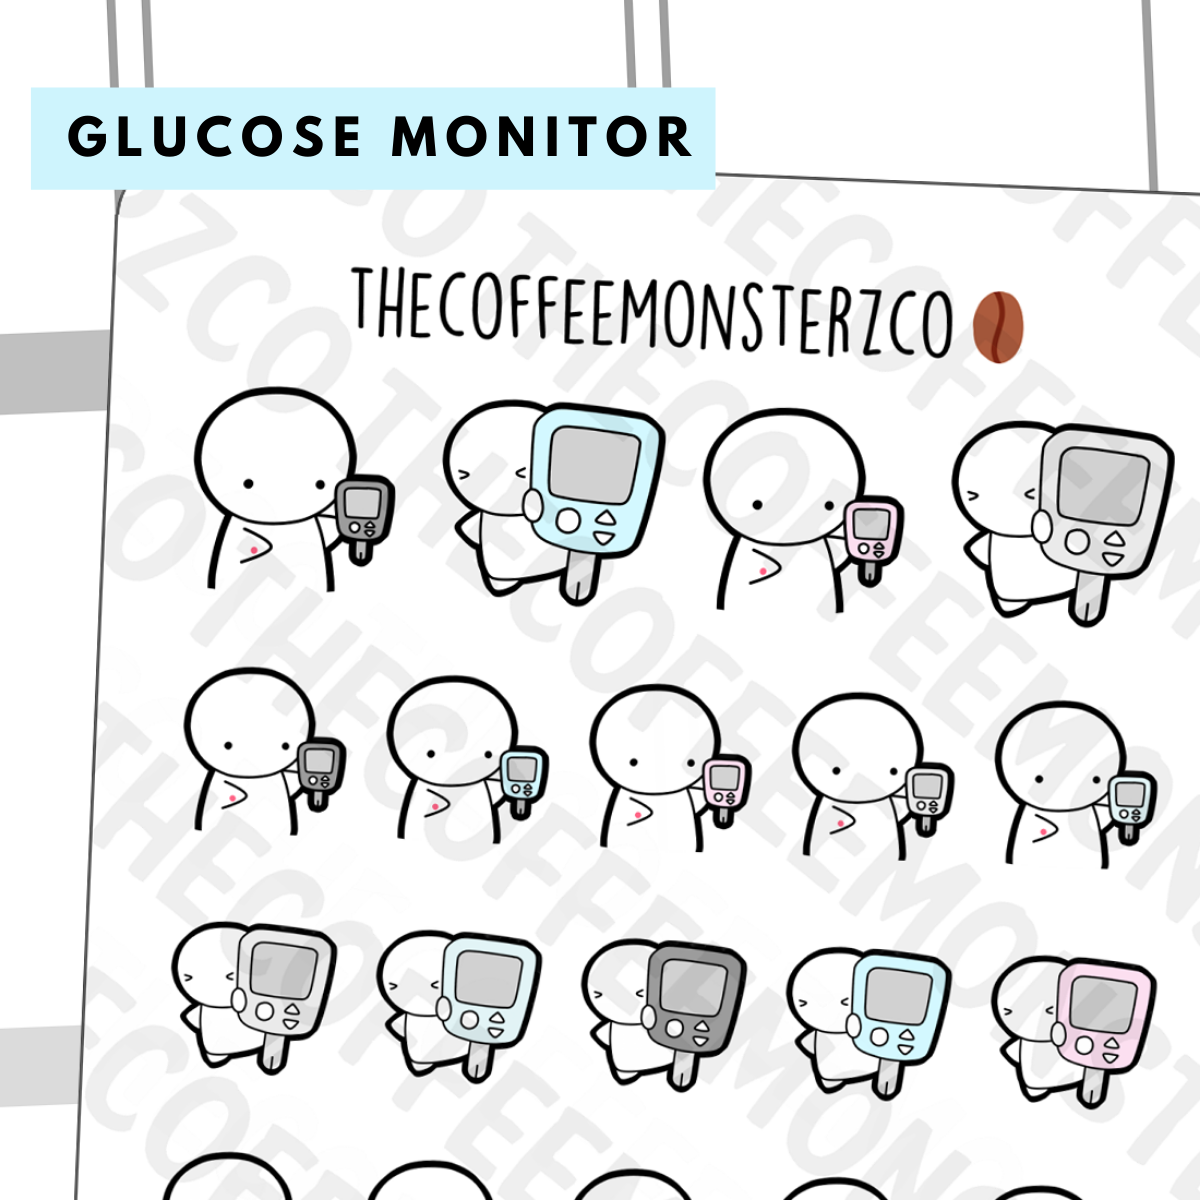 Glucose Monitor Emotis